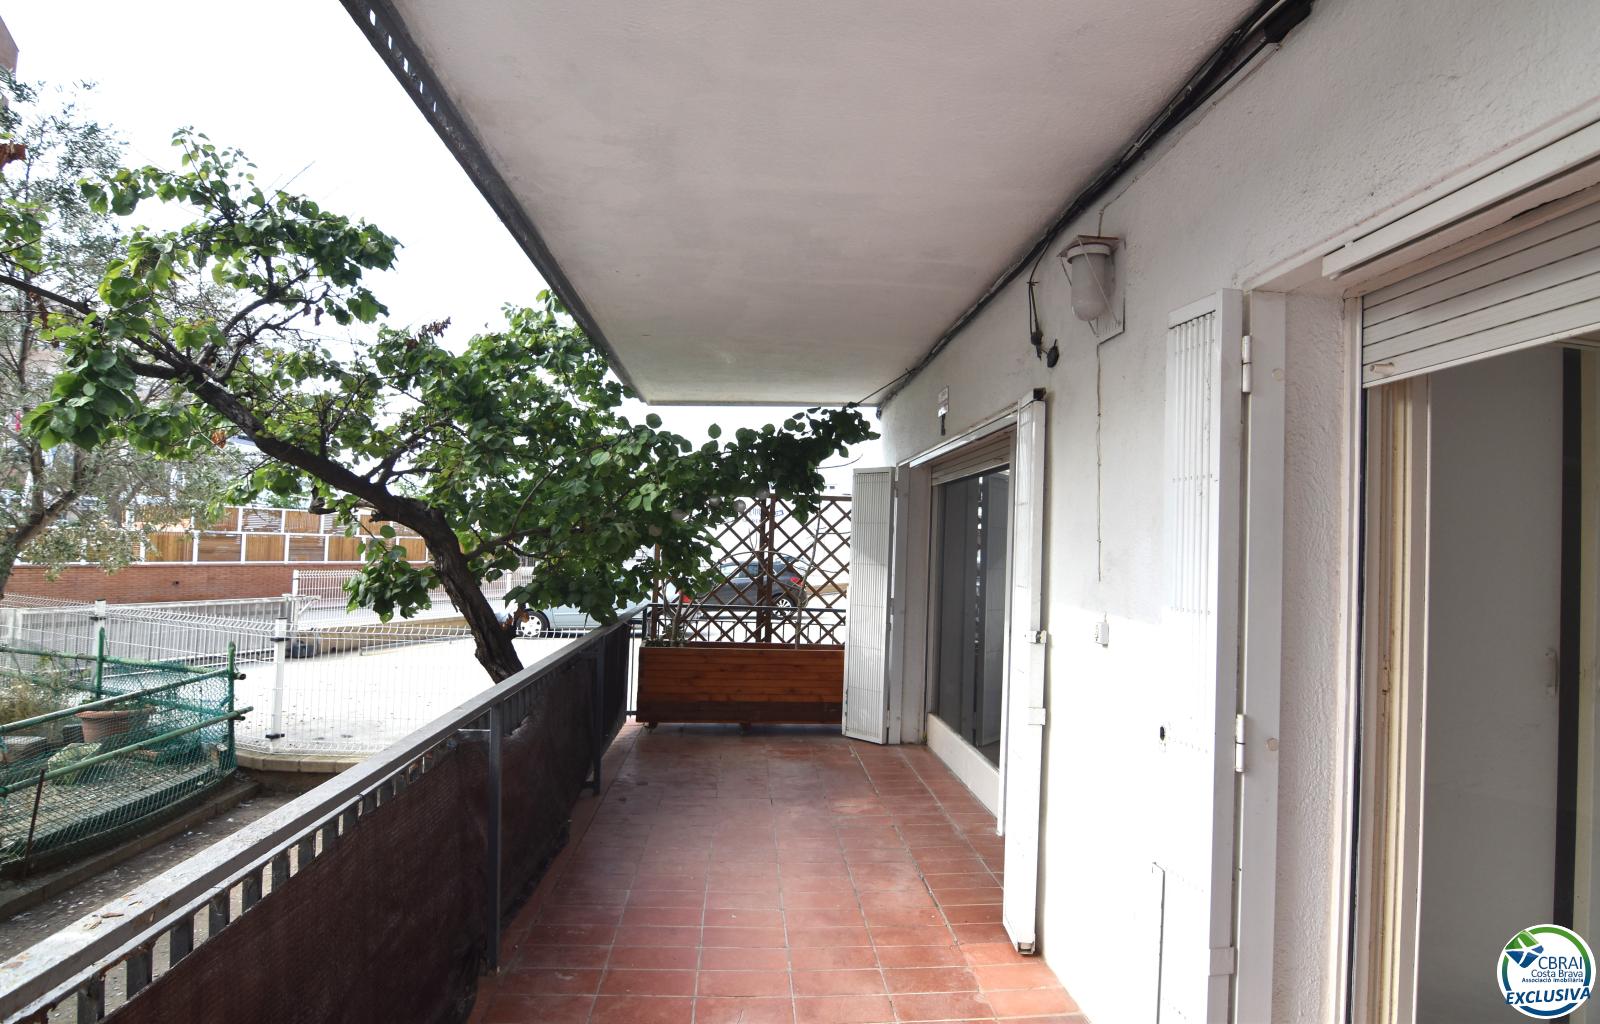 First floor apartment in Santa Margarita, just 250 meters from the beach.